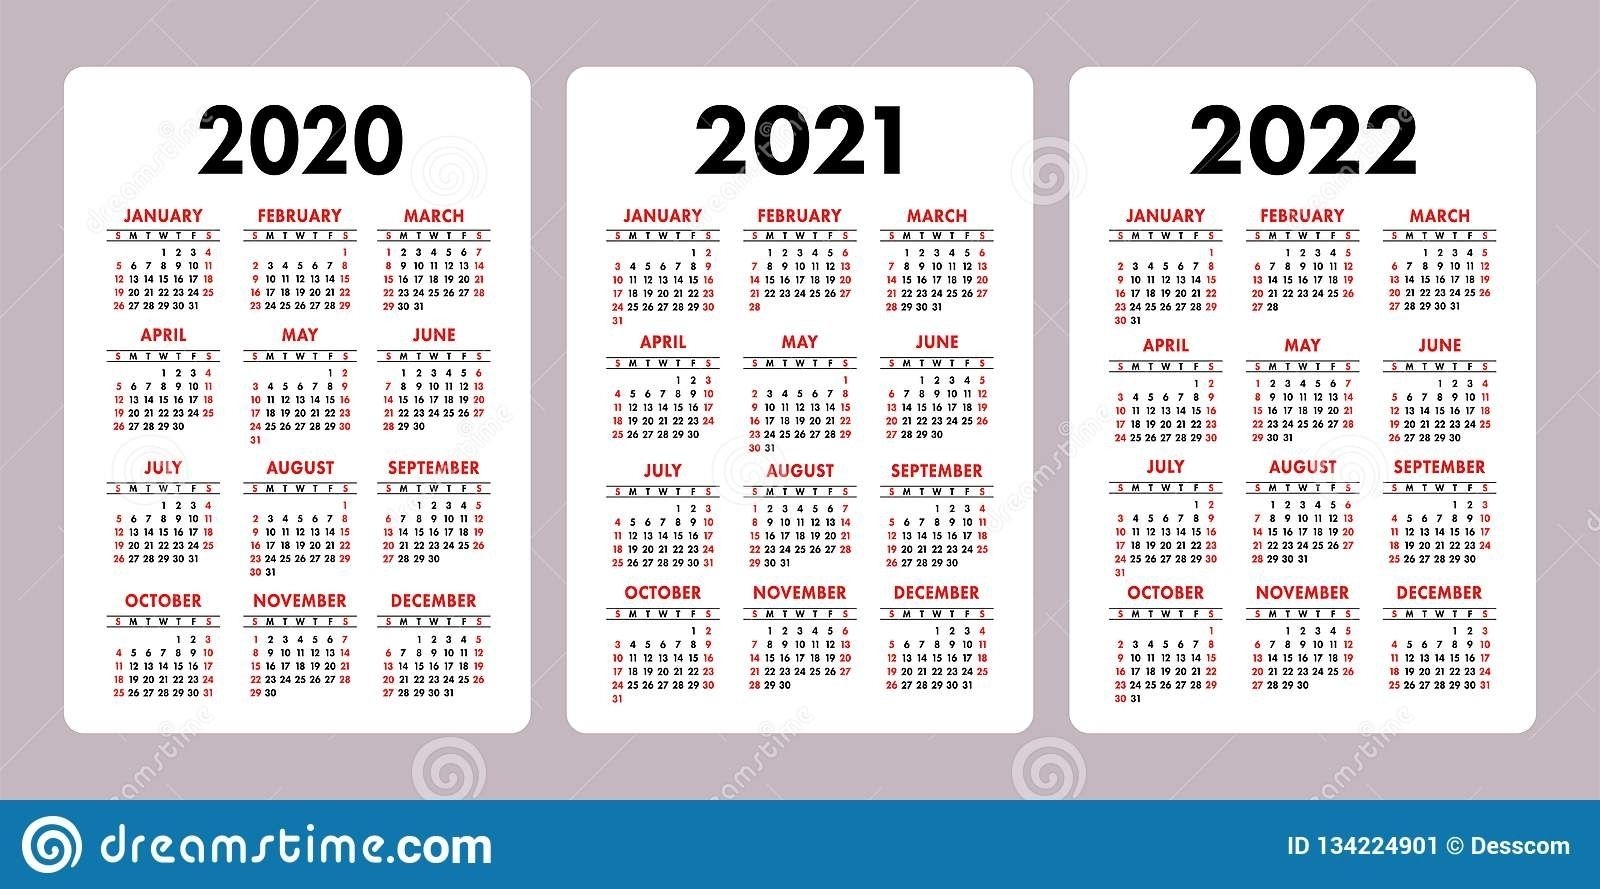 4 Year Calendar 2020 To 2022 | Month Calendar Printable